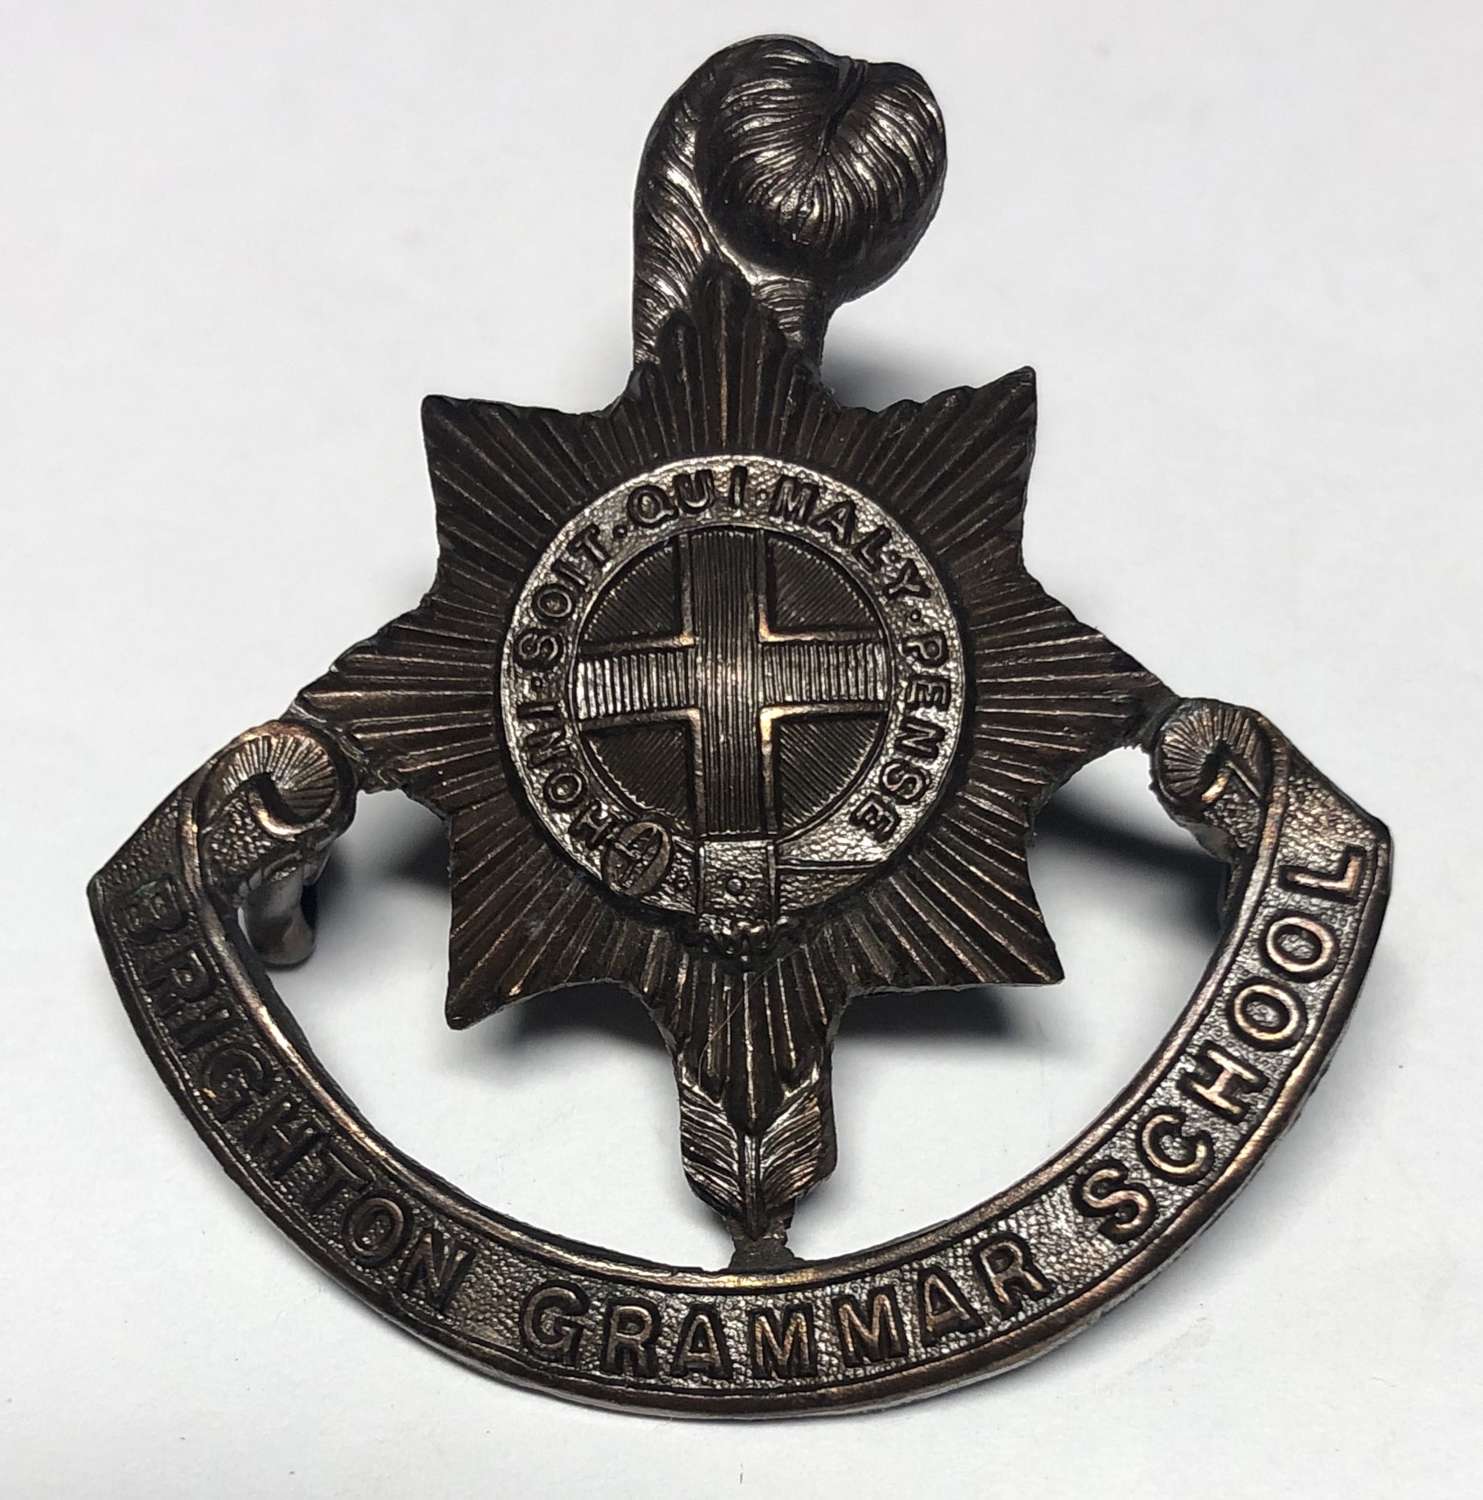 Brighton Grammar School unusual cap badge